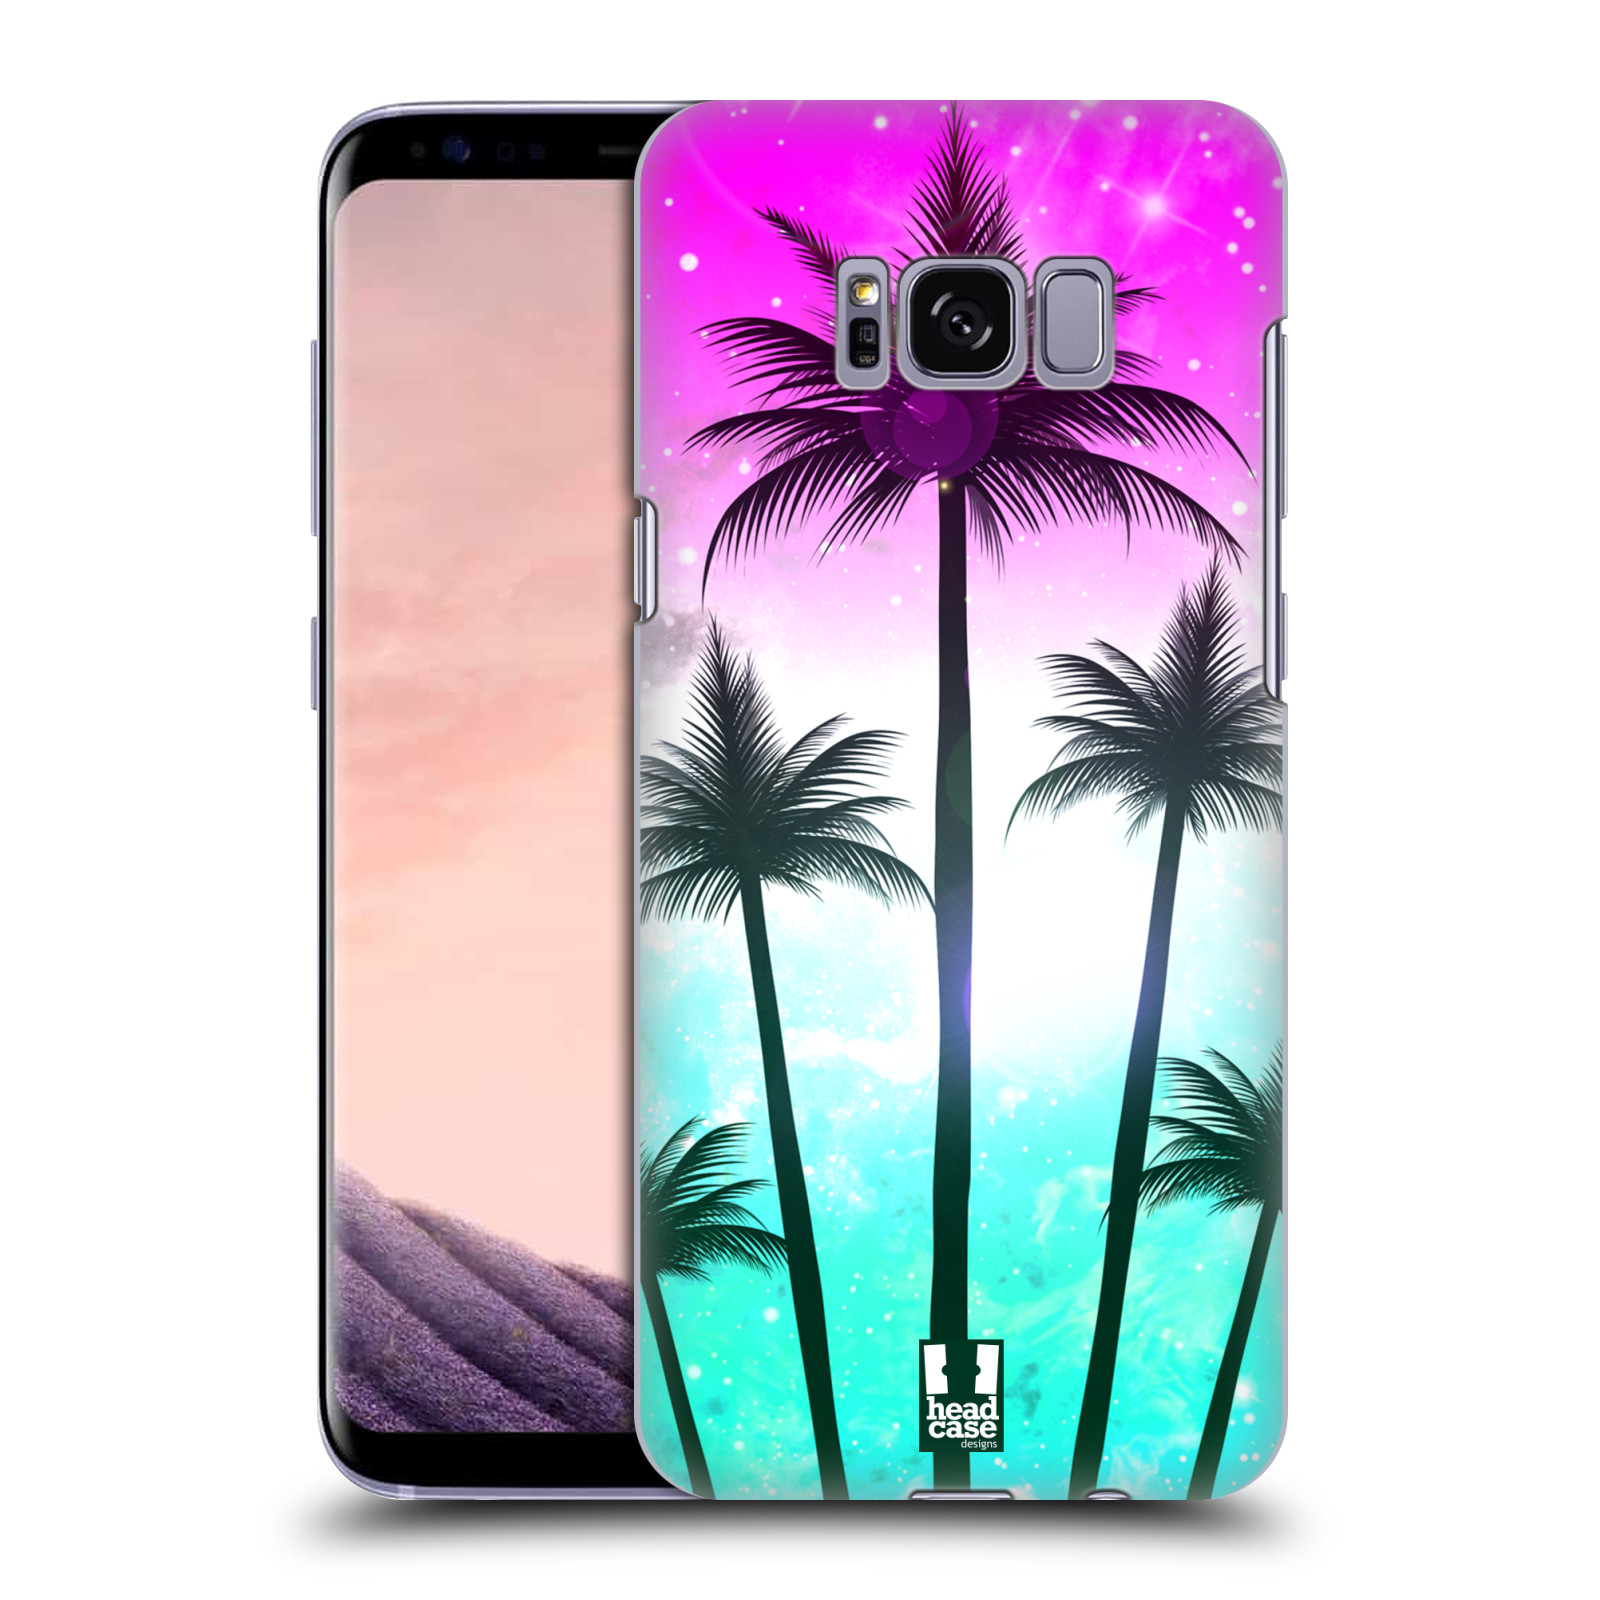 HEAD CASE plastový obal na mobil Samsung Galaxy S8 vzor Kreslený motiv silueta moře a palmy RŮŽOVÁ A TYRKYS